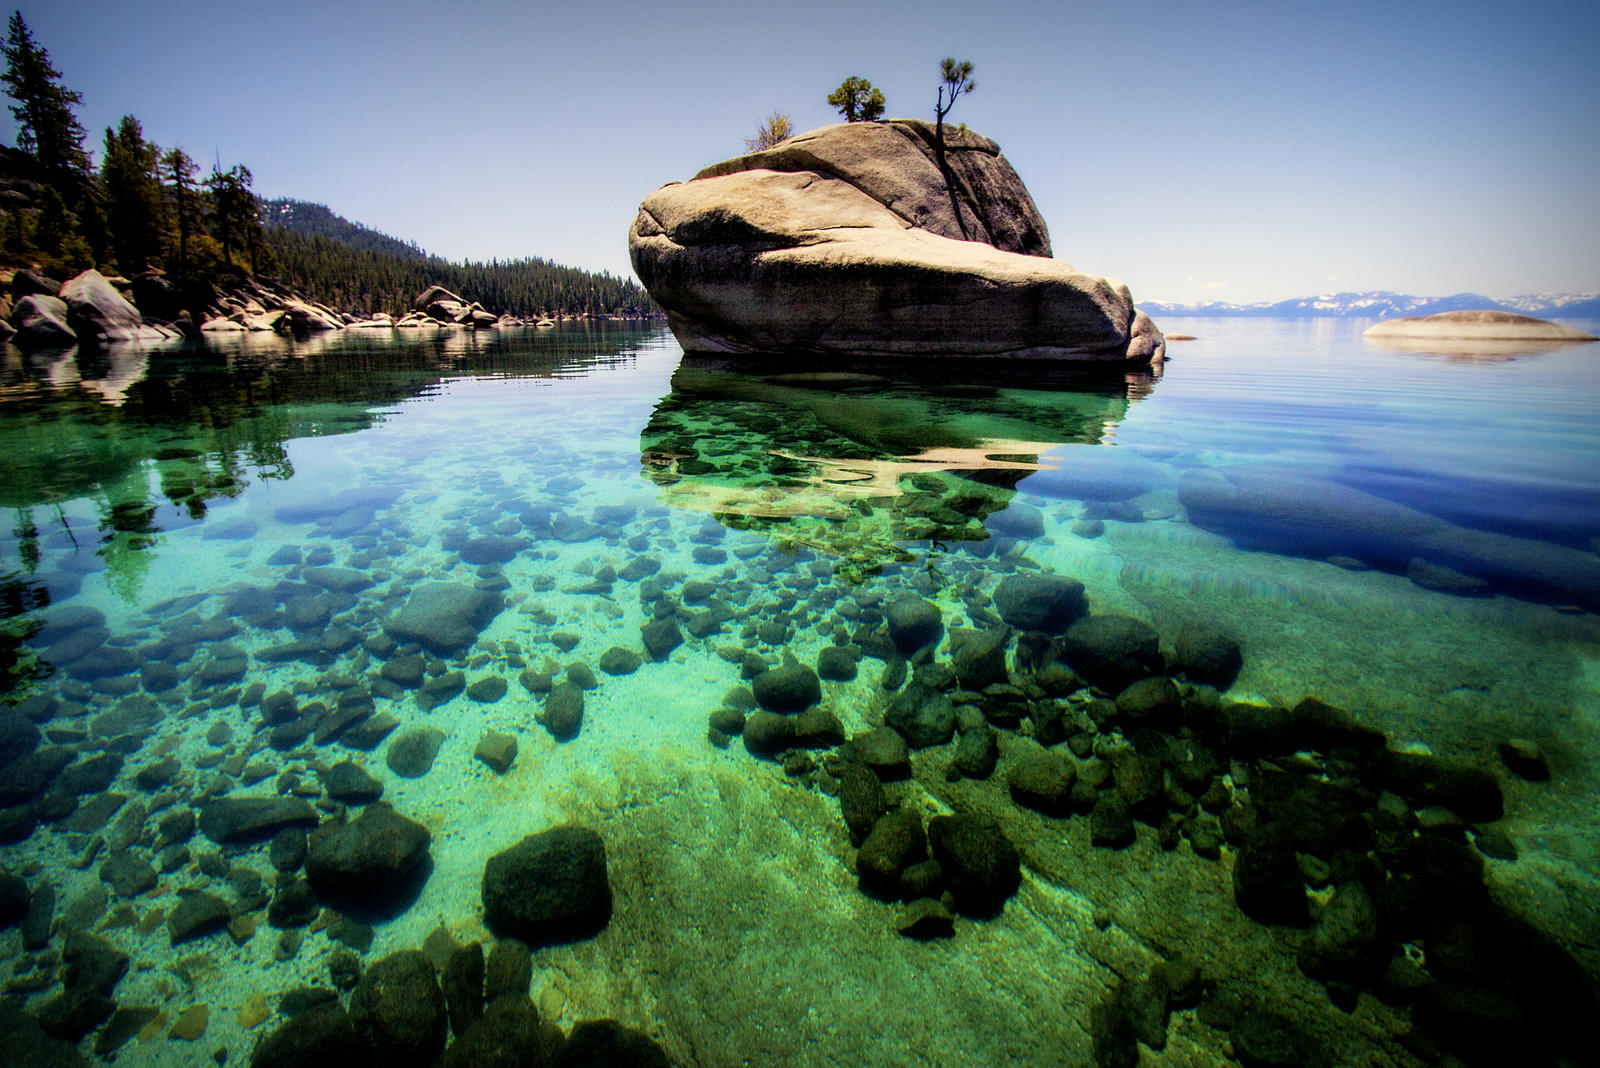 Bonsai Rock at Tahoe